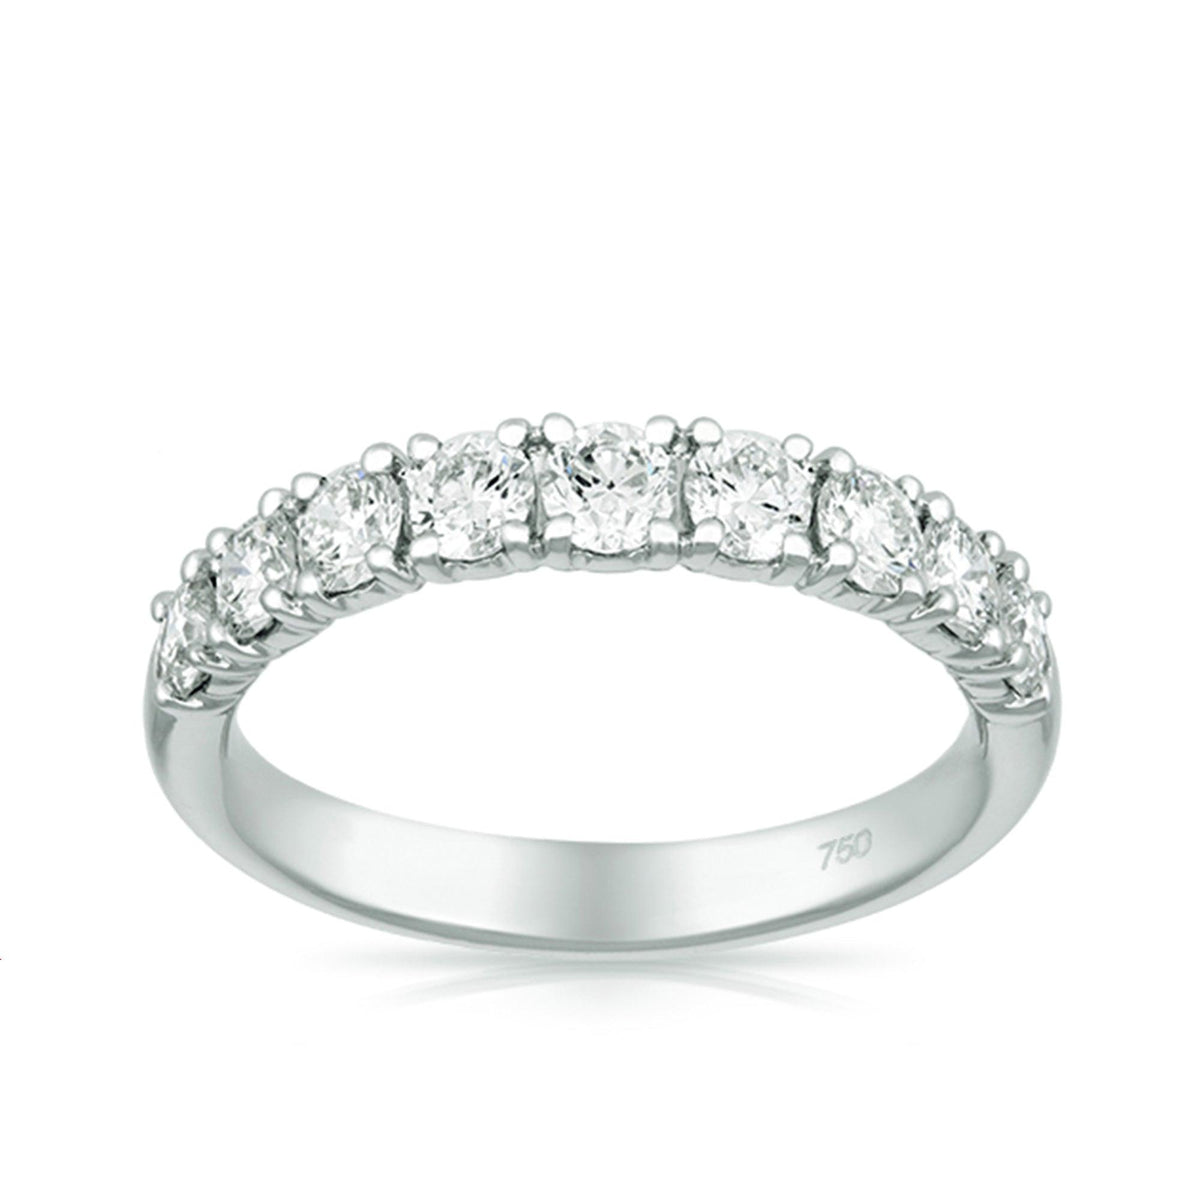 Round Brilliant Cut Diamond Anniversary Ring in 18ct White Gold TDW 0.760 - Wallace Bishop